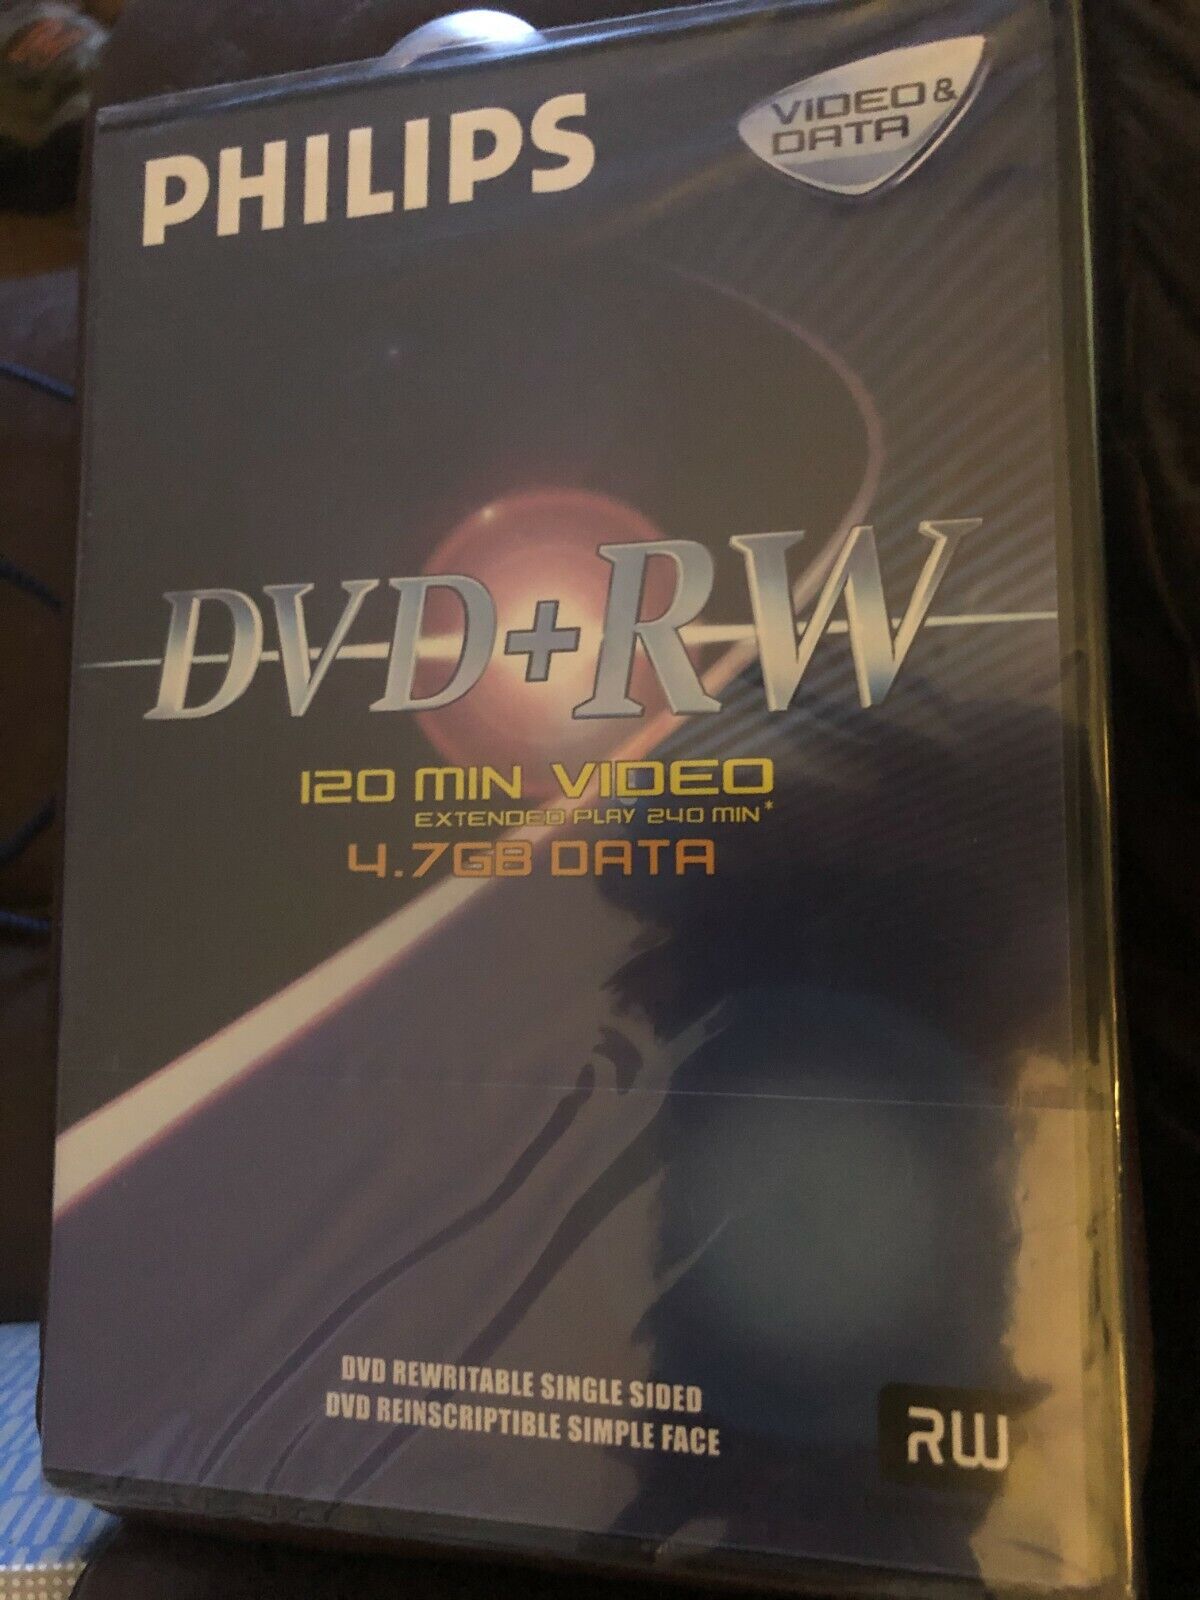 PHILIPS DVD+RW 120 MINUTE VIDEO 4.7 GB DATA.